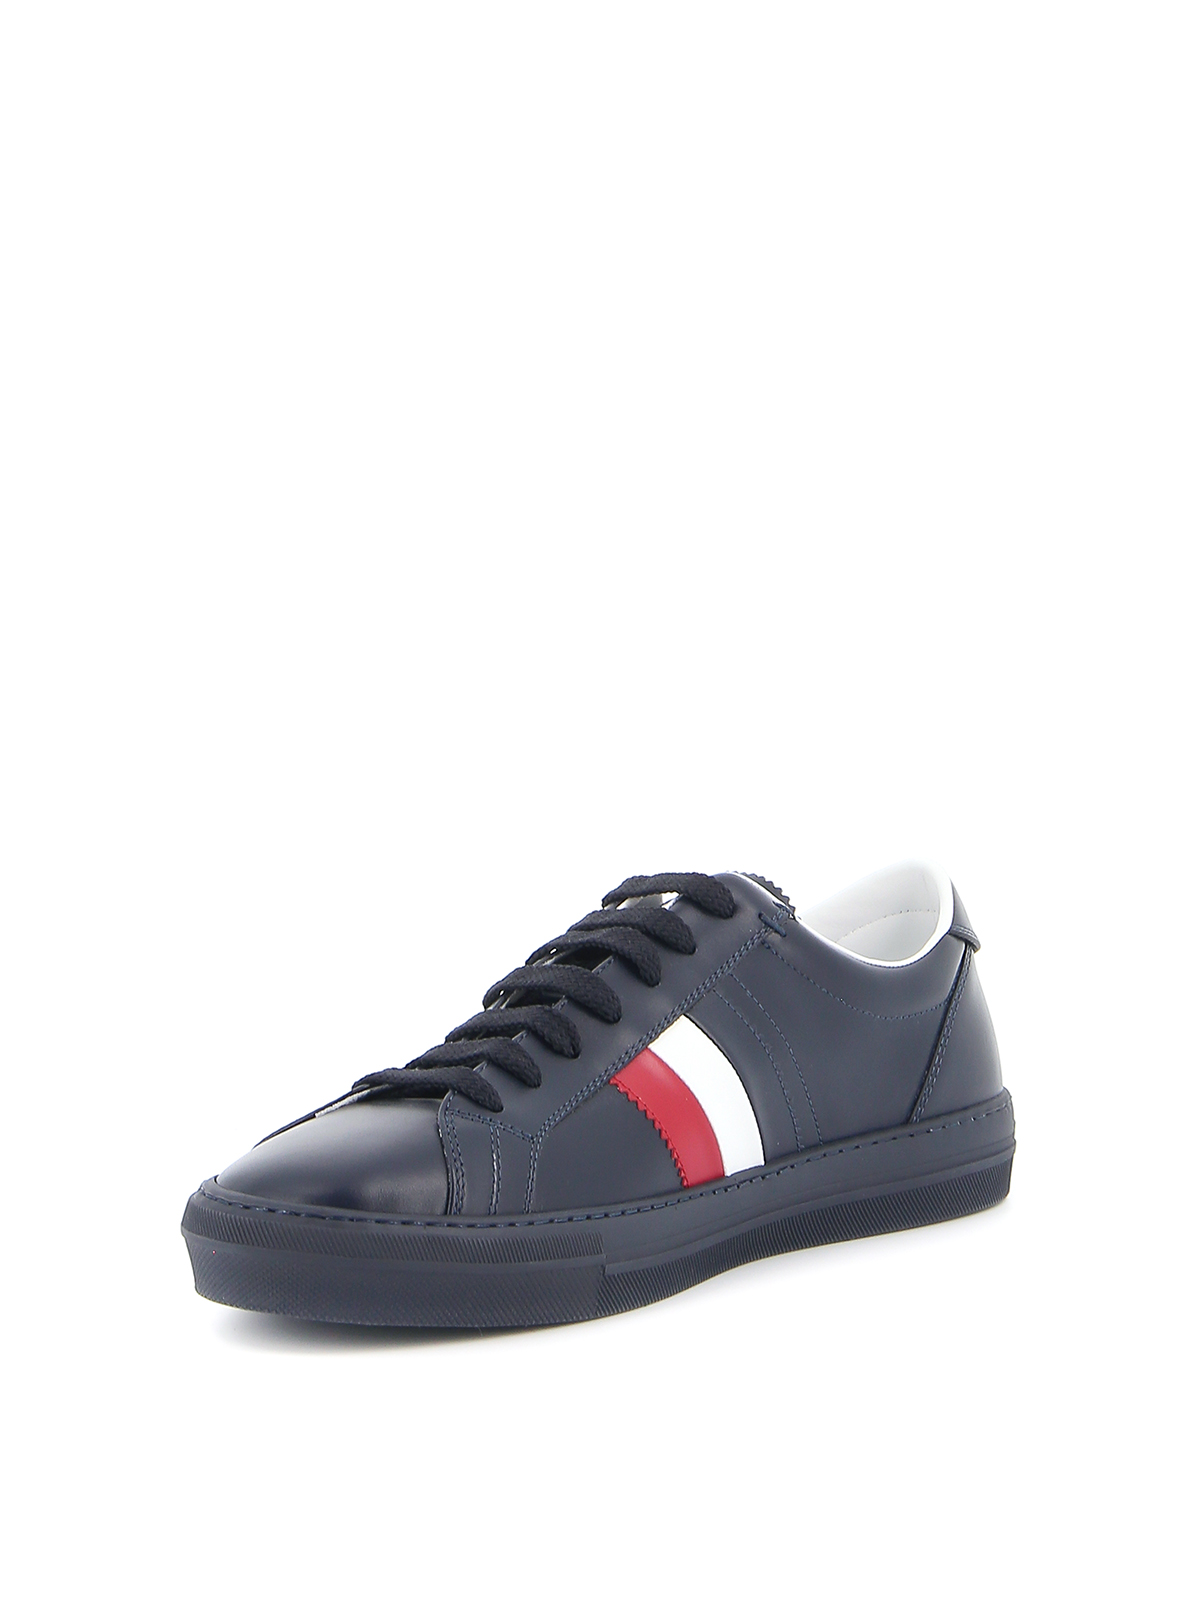 New Monaco Scarpa Moncler Footwear Sneakers White